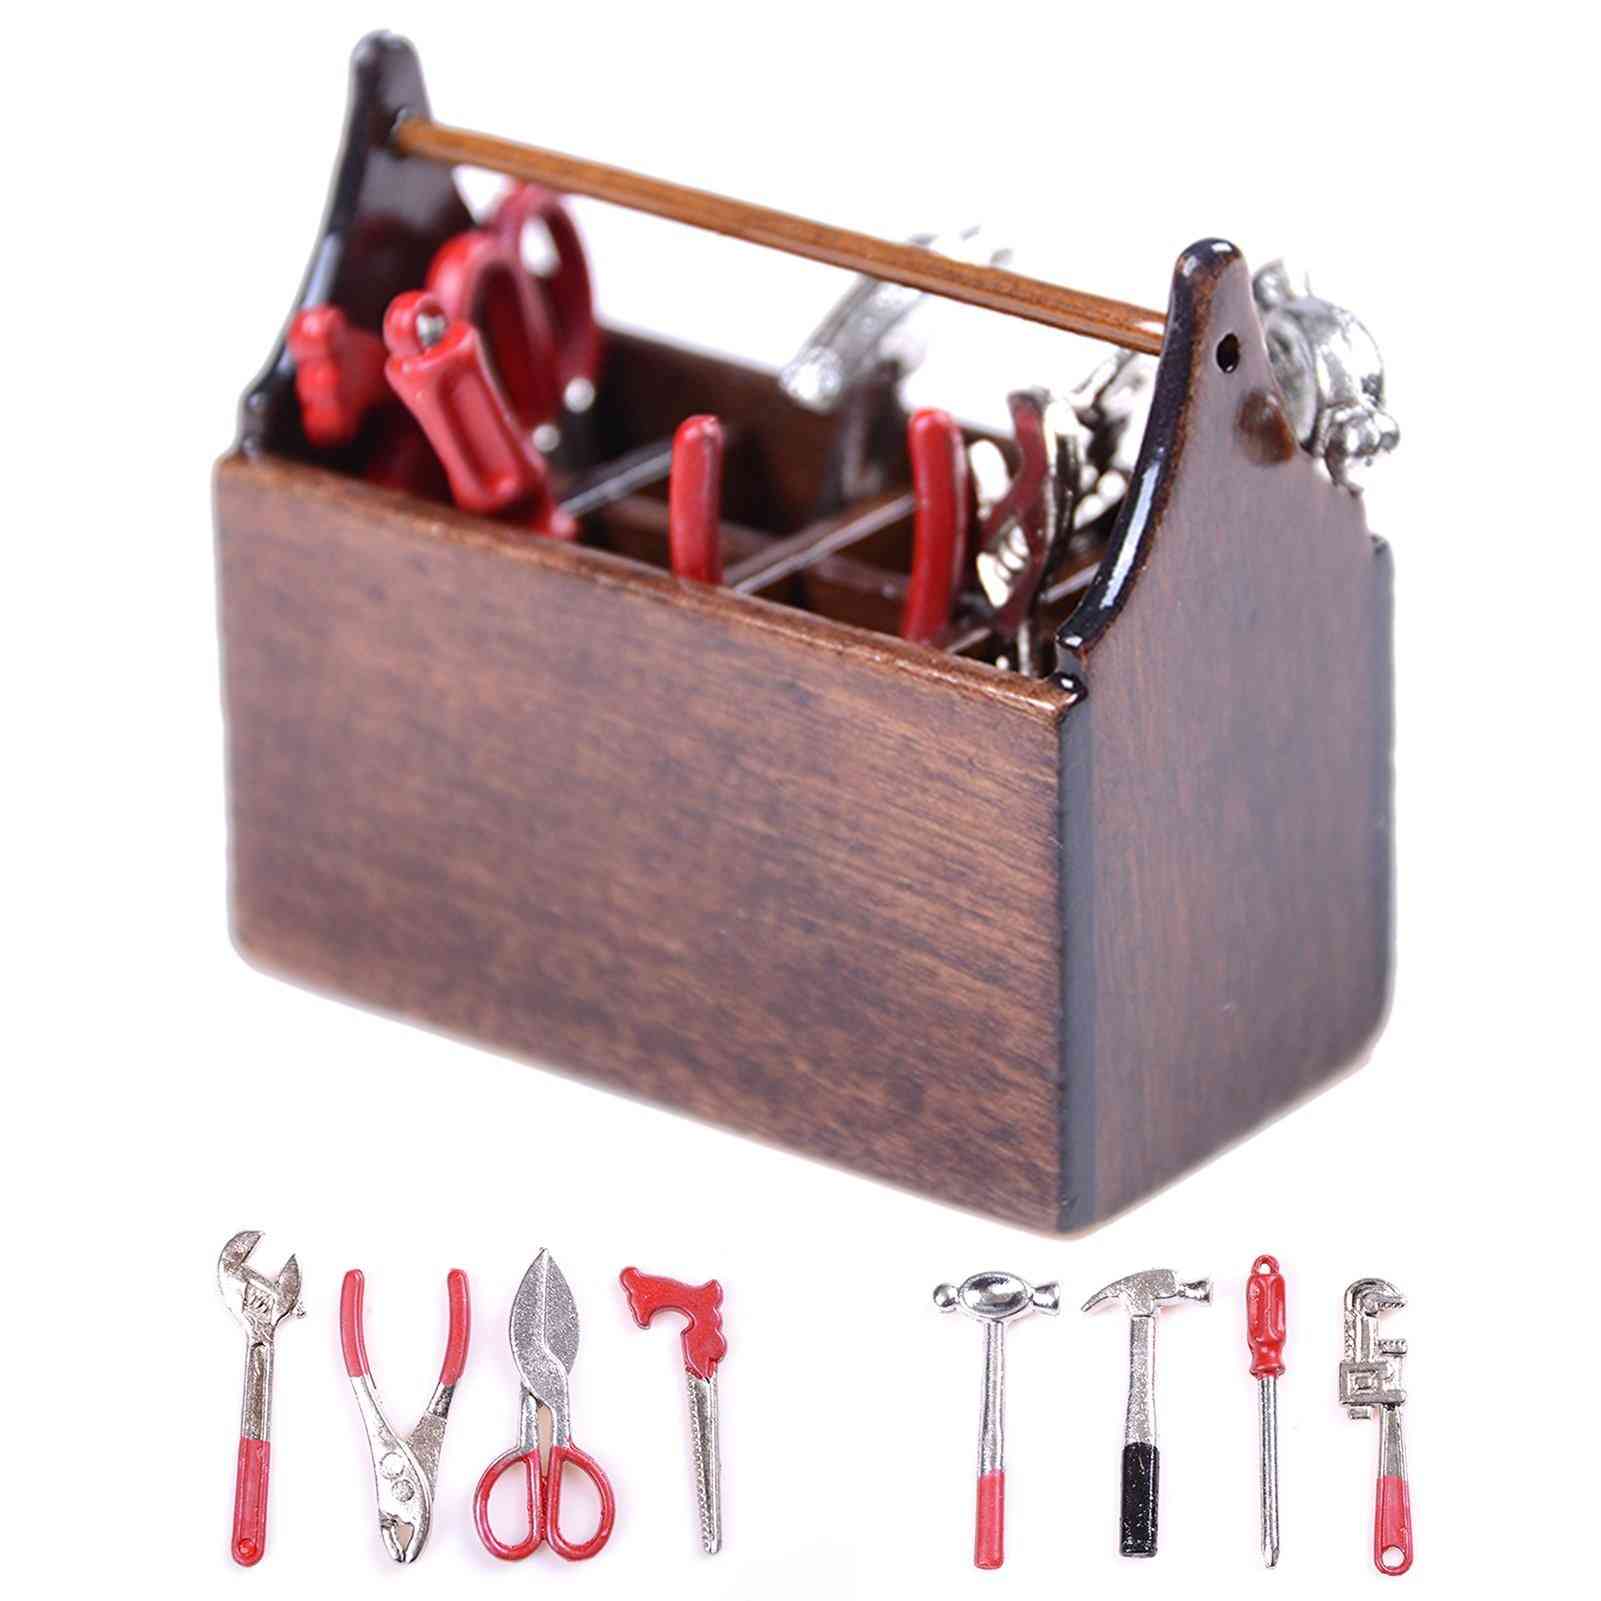 Dollhouse Miniature Wooden Tool-box, Metal Tools Set, Kids Educational